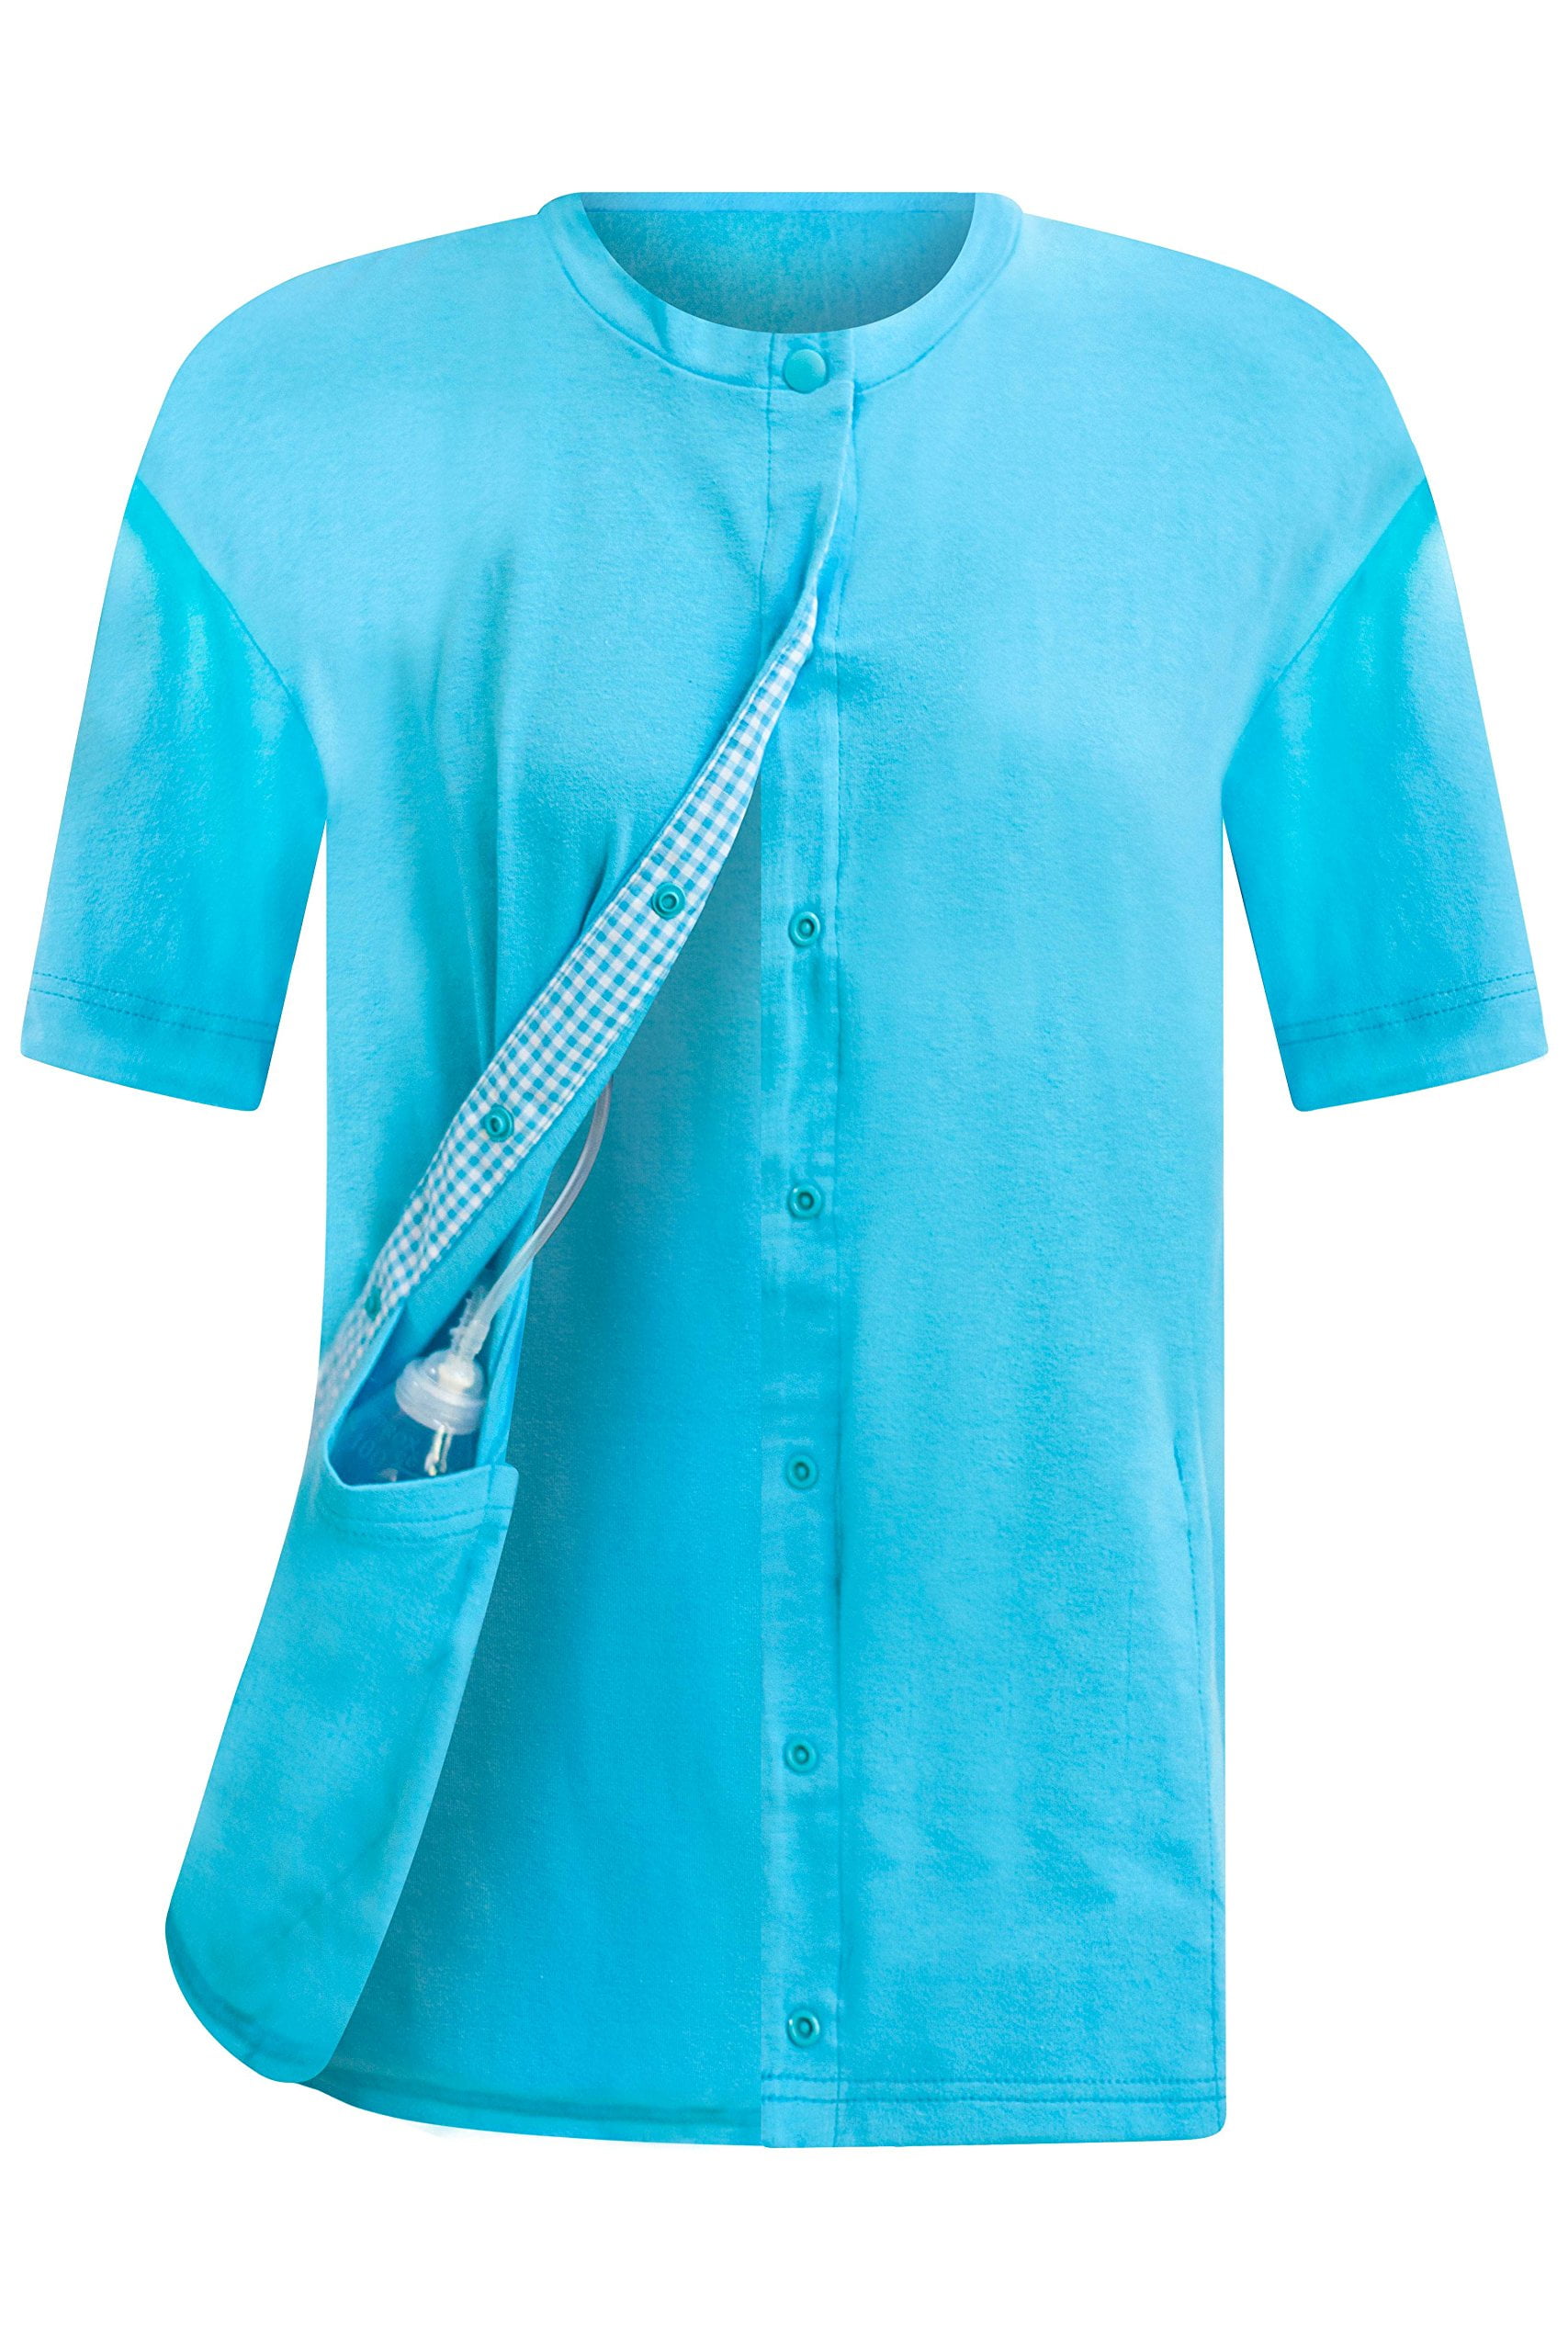 Post Surgery Mastectomy Shirt With Drain Management Pockets - Aqua